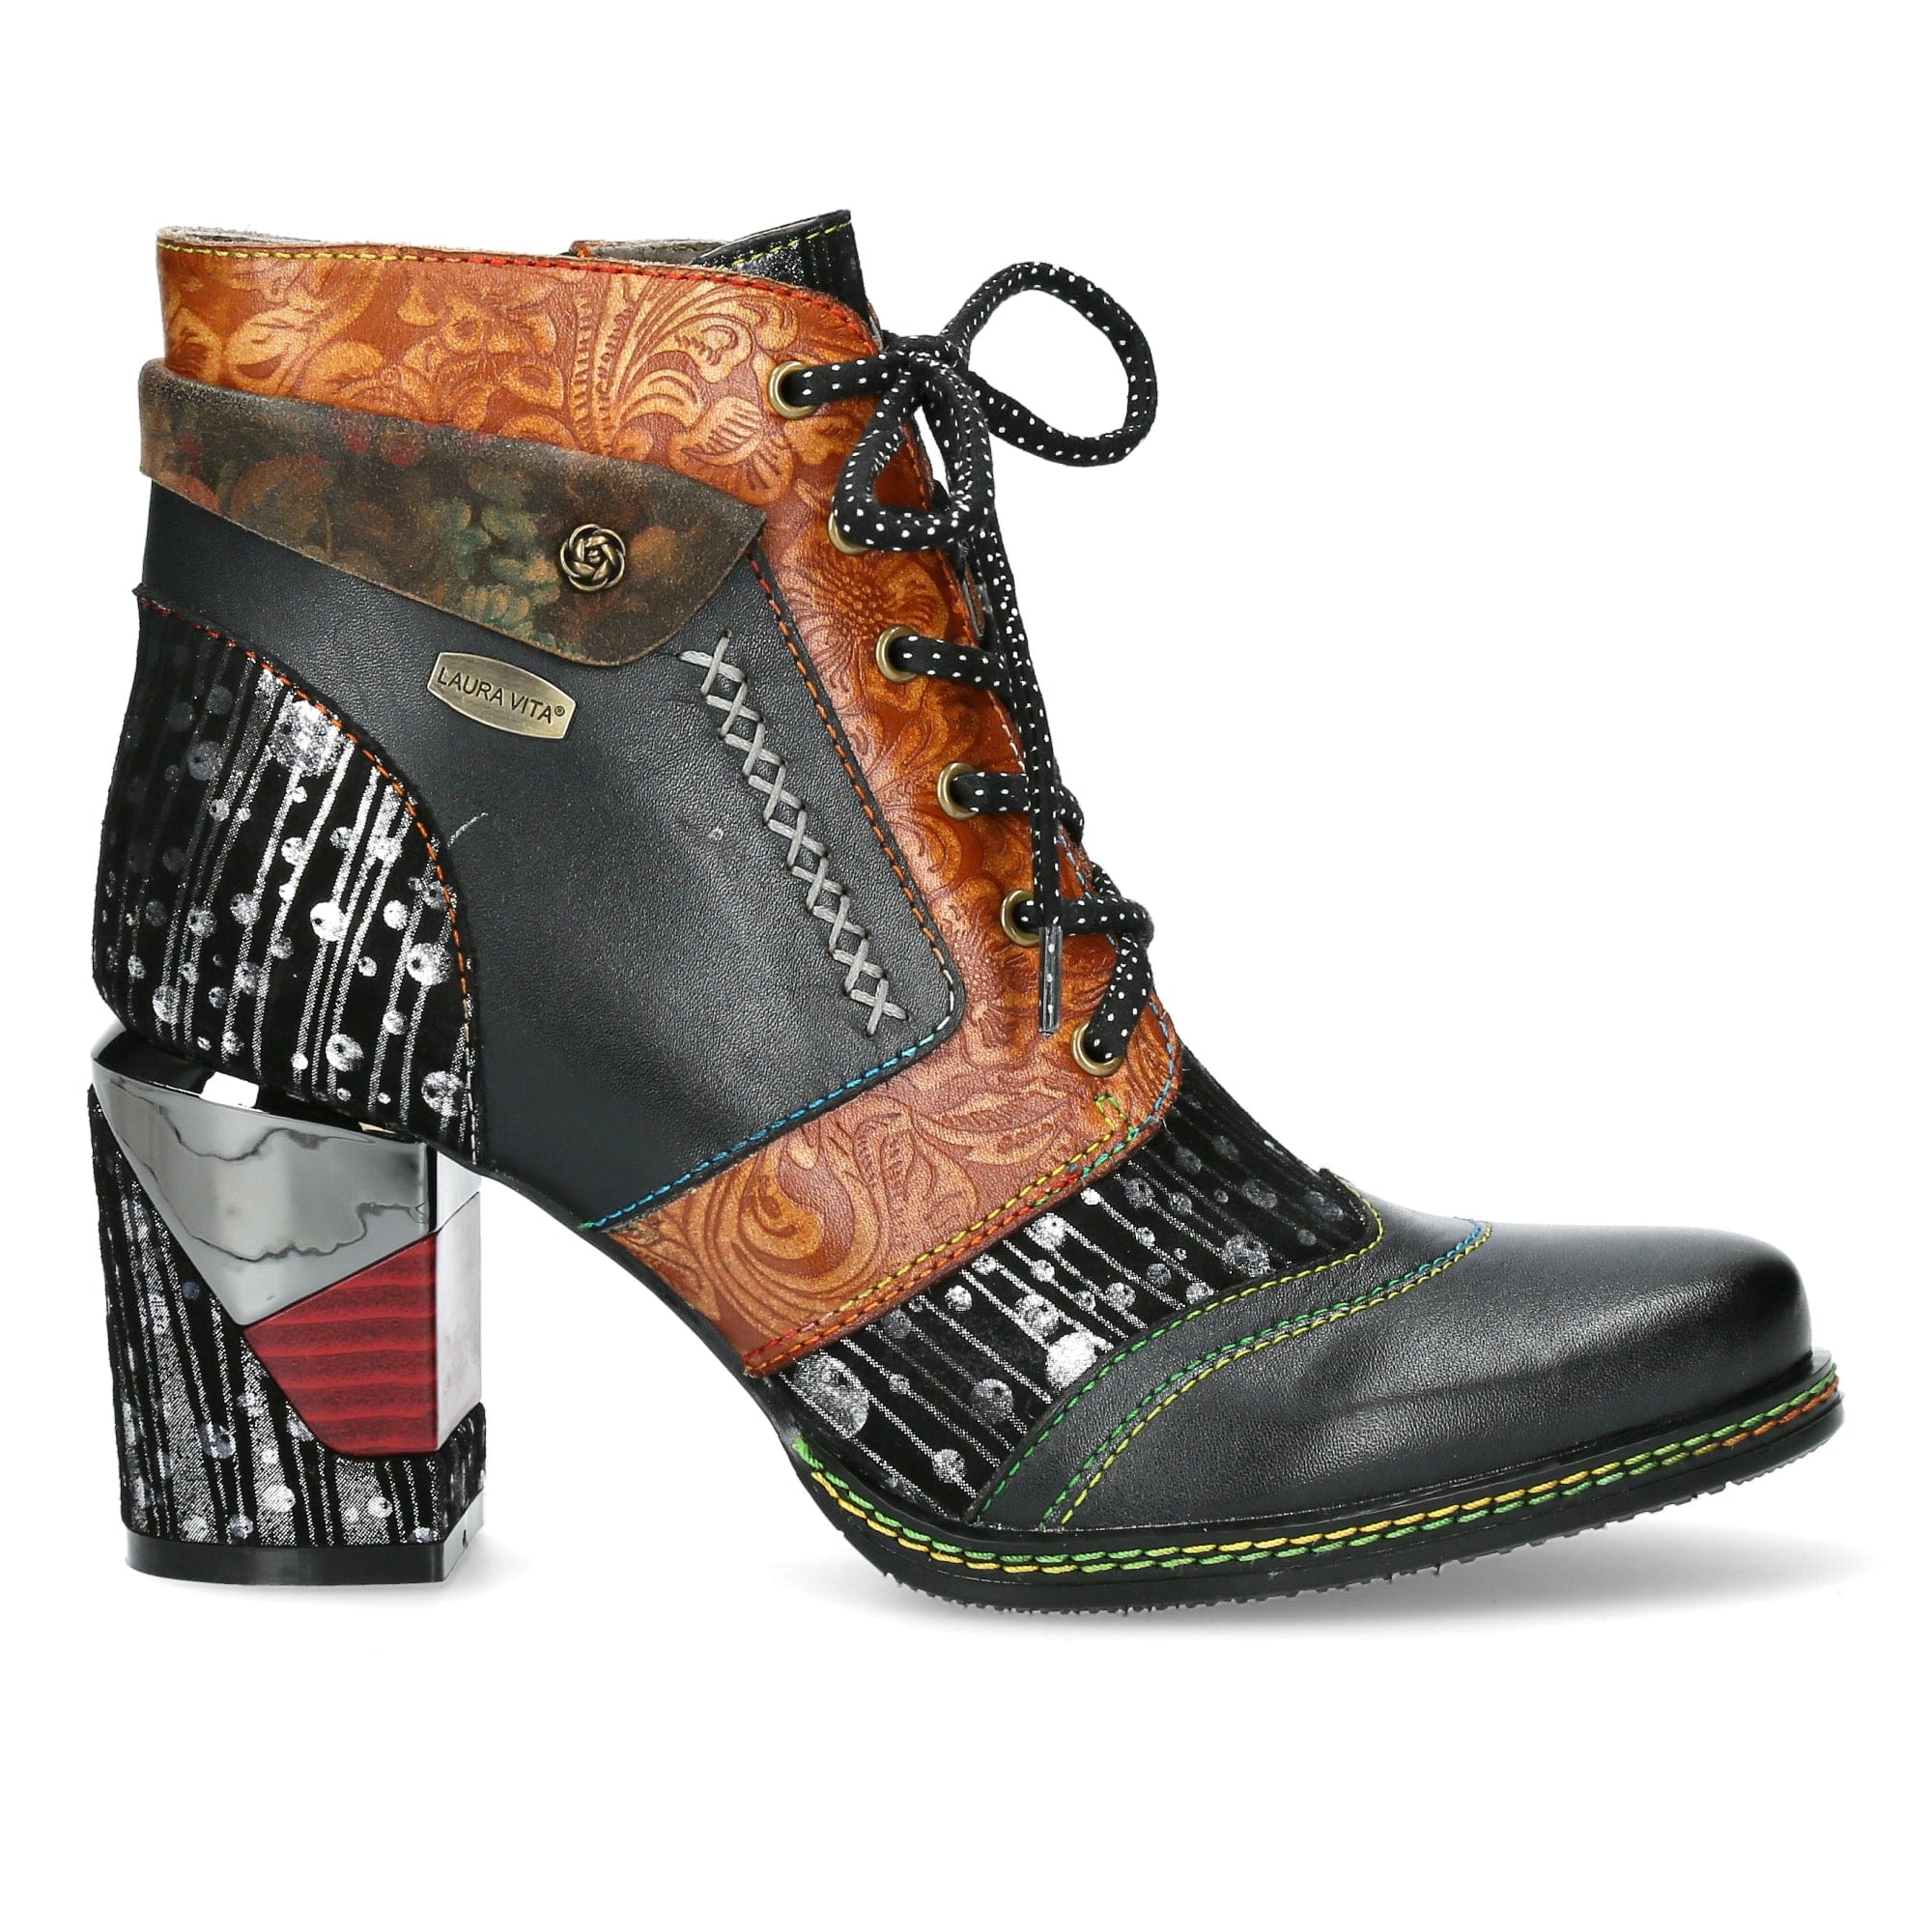 Chaussure MAEVAO 03 - 35 / Noir - Boots